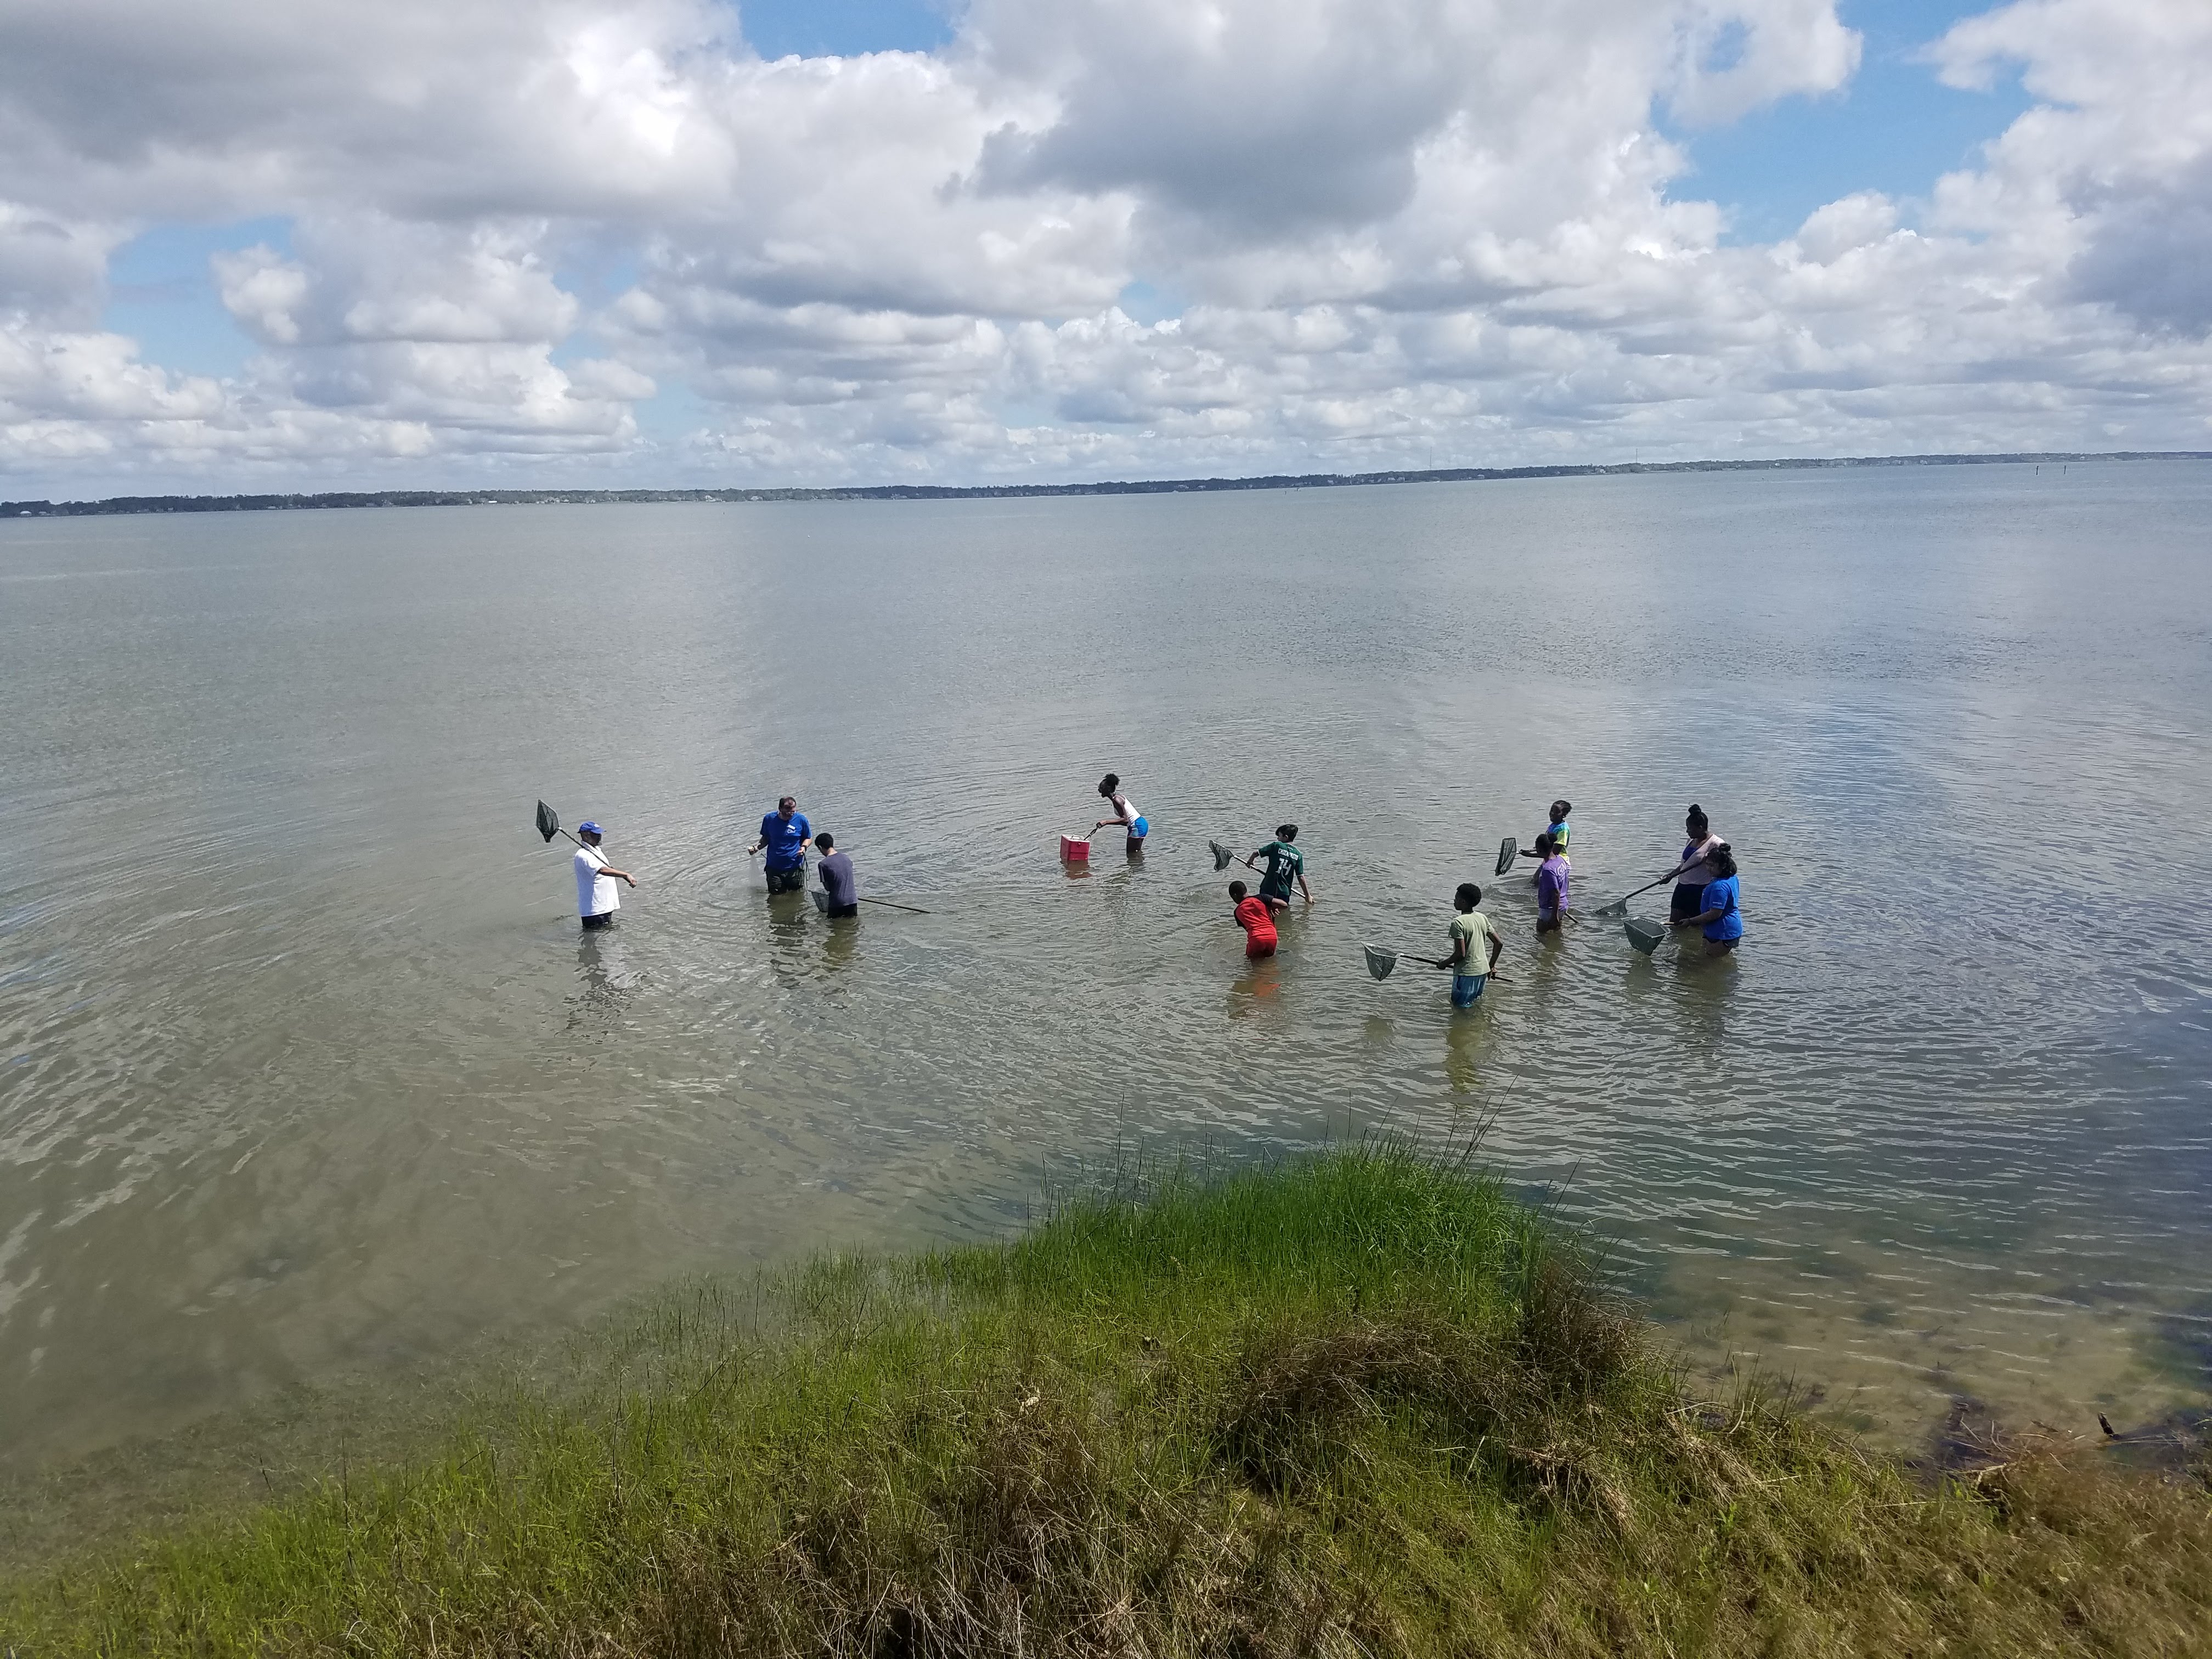 BOOST 6th grade scholars explore Bogue Sound in Pine Knoll Shores